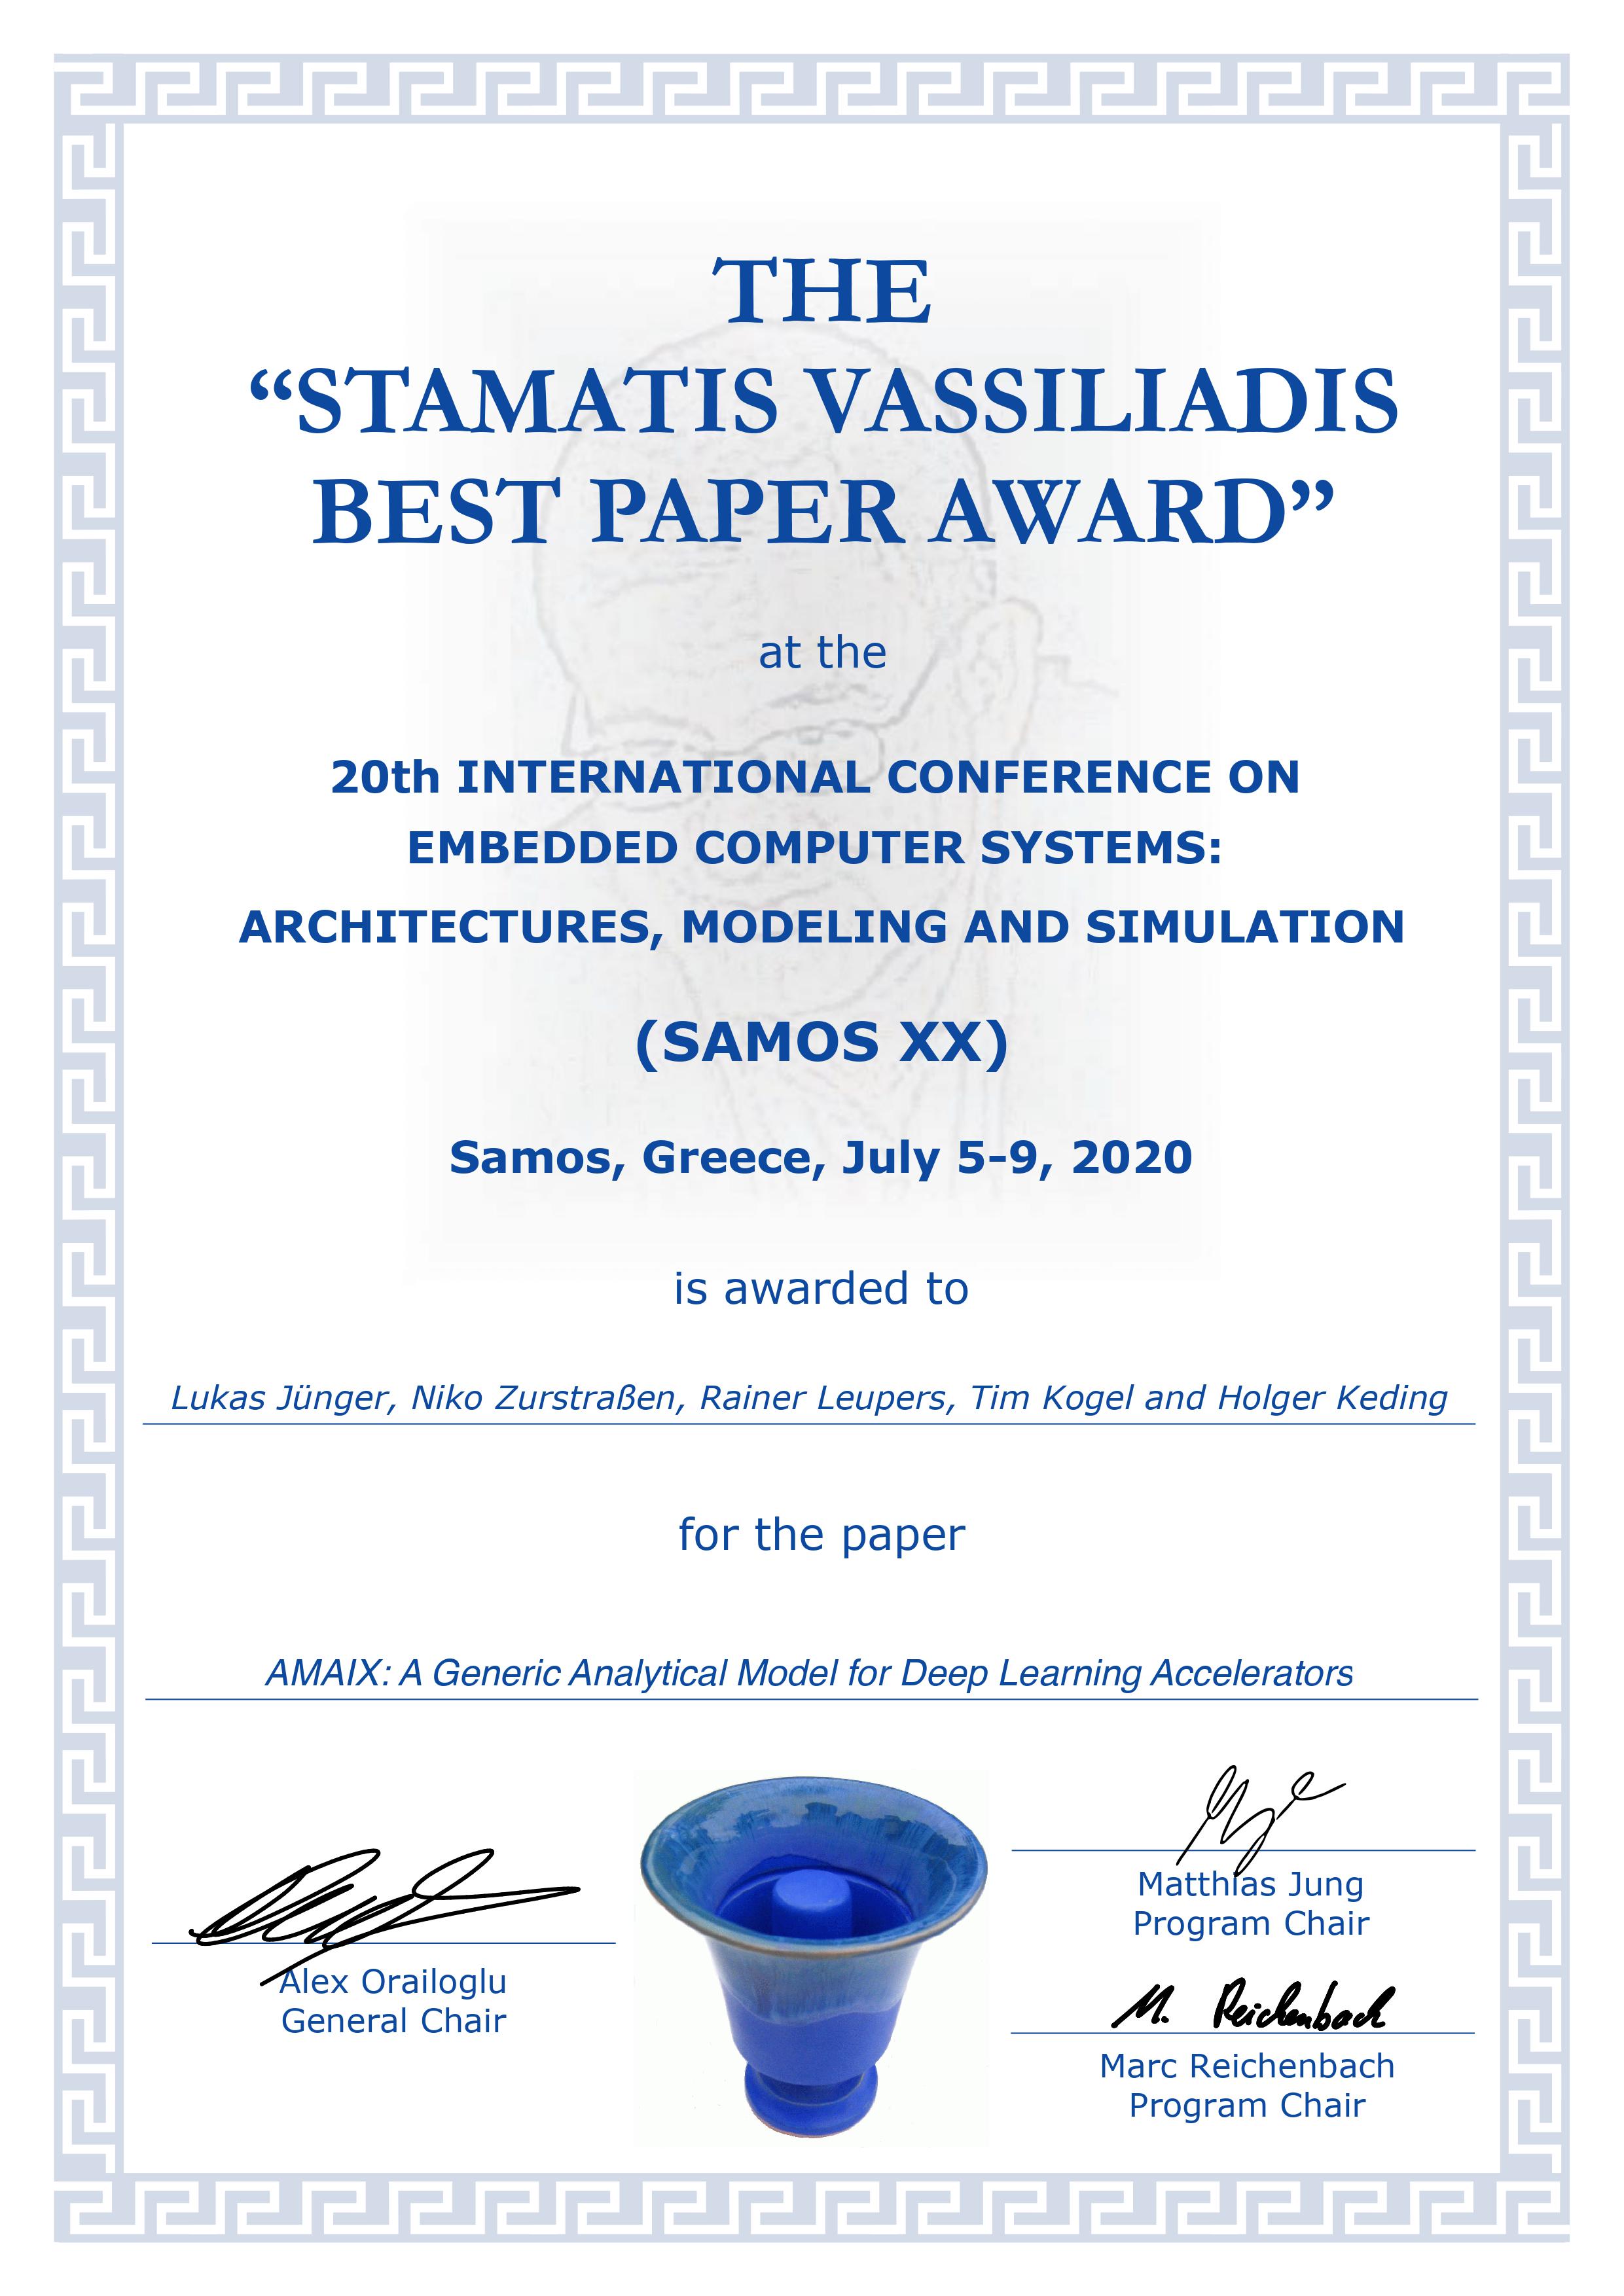 Samos conference 2020: Best Paper Award